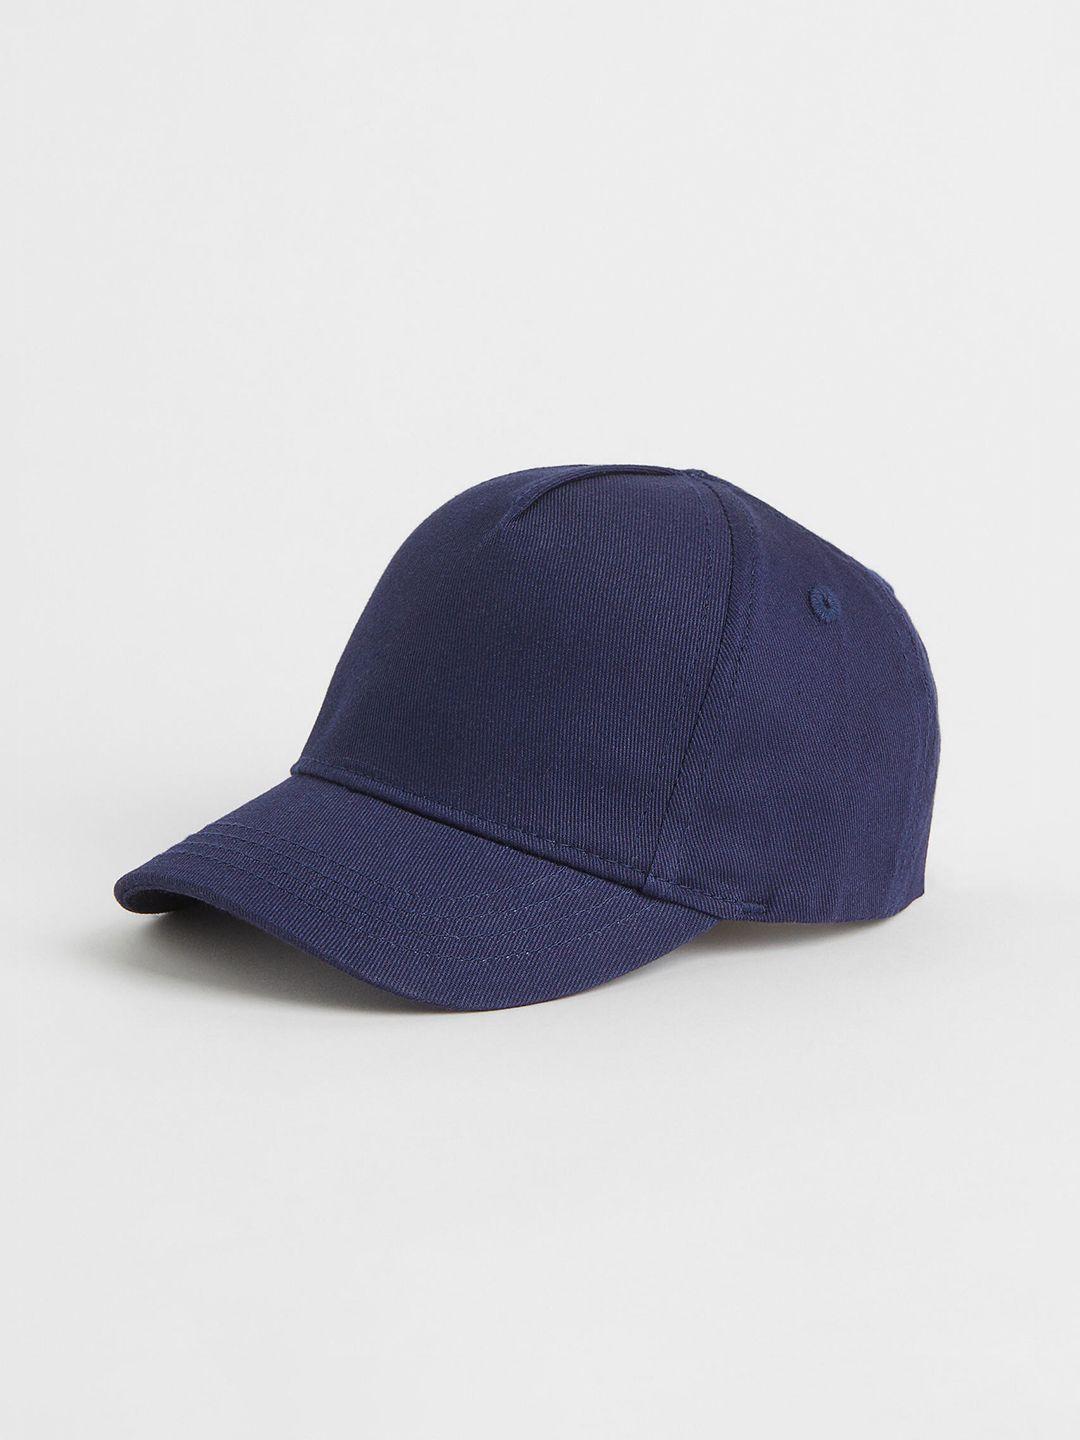 h&m girls blue cotton cap